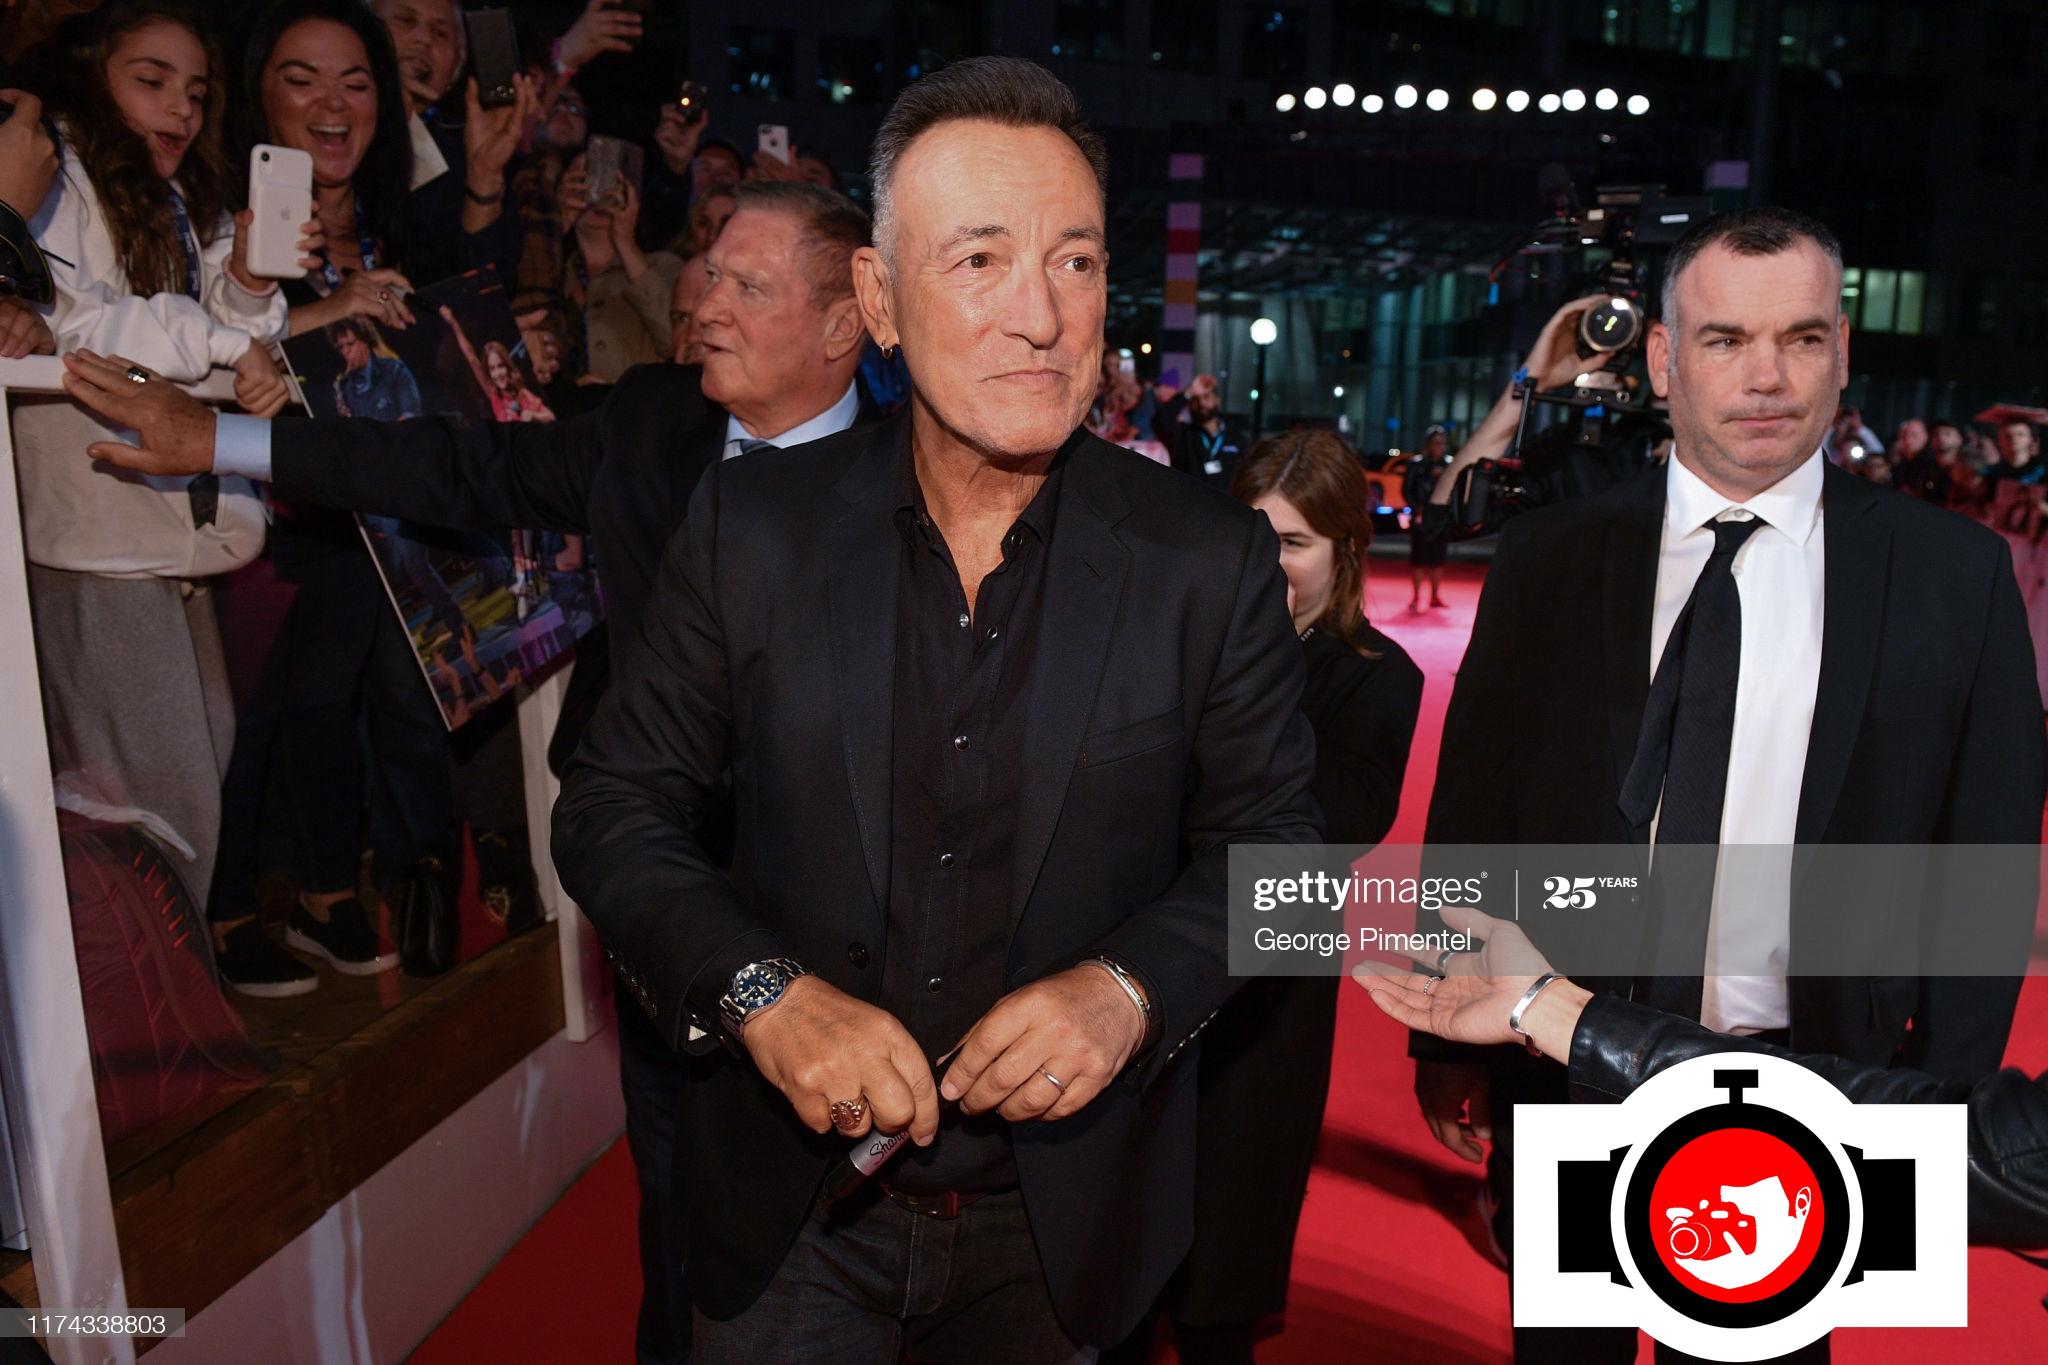 singer Bruce Springsteen spotted wearing a Tudor 9411